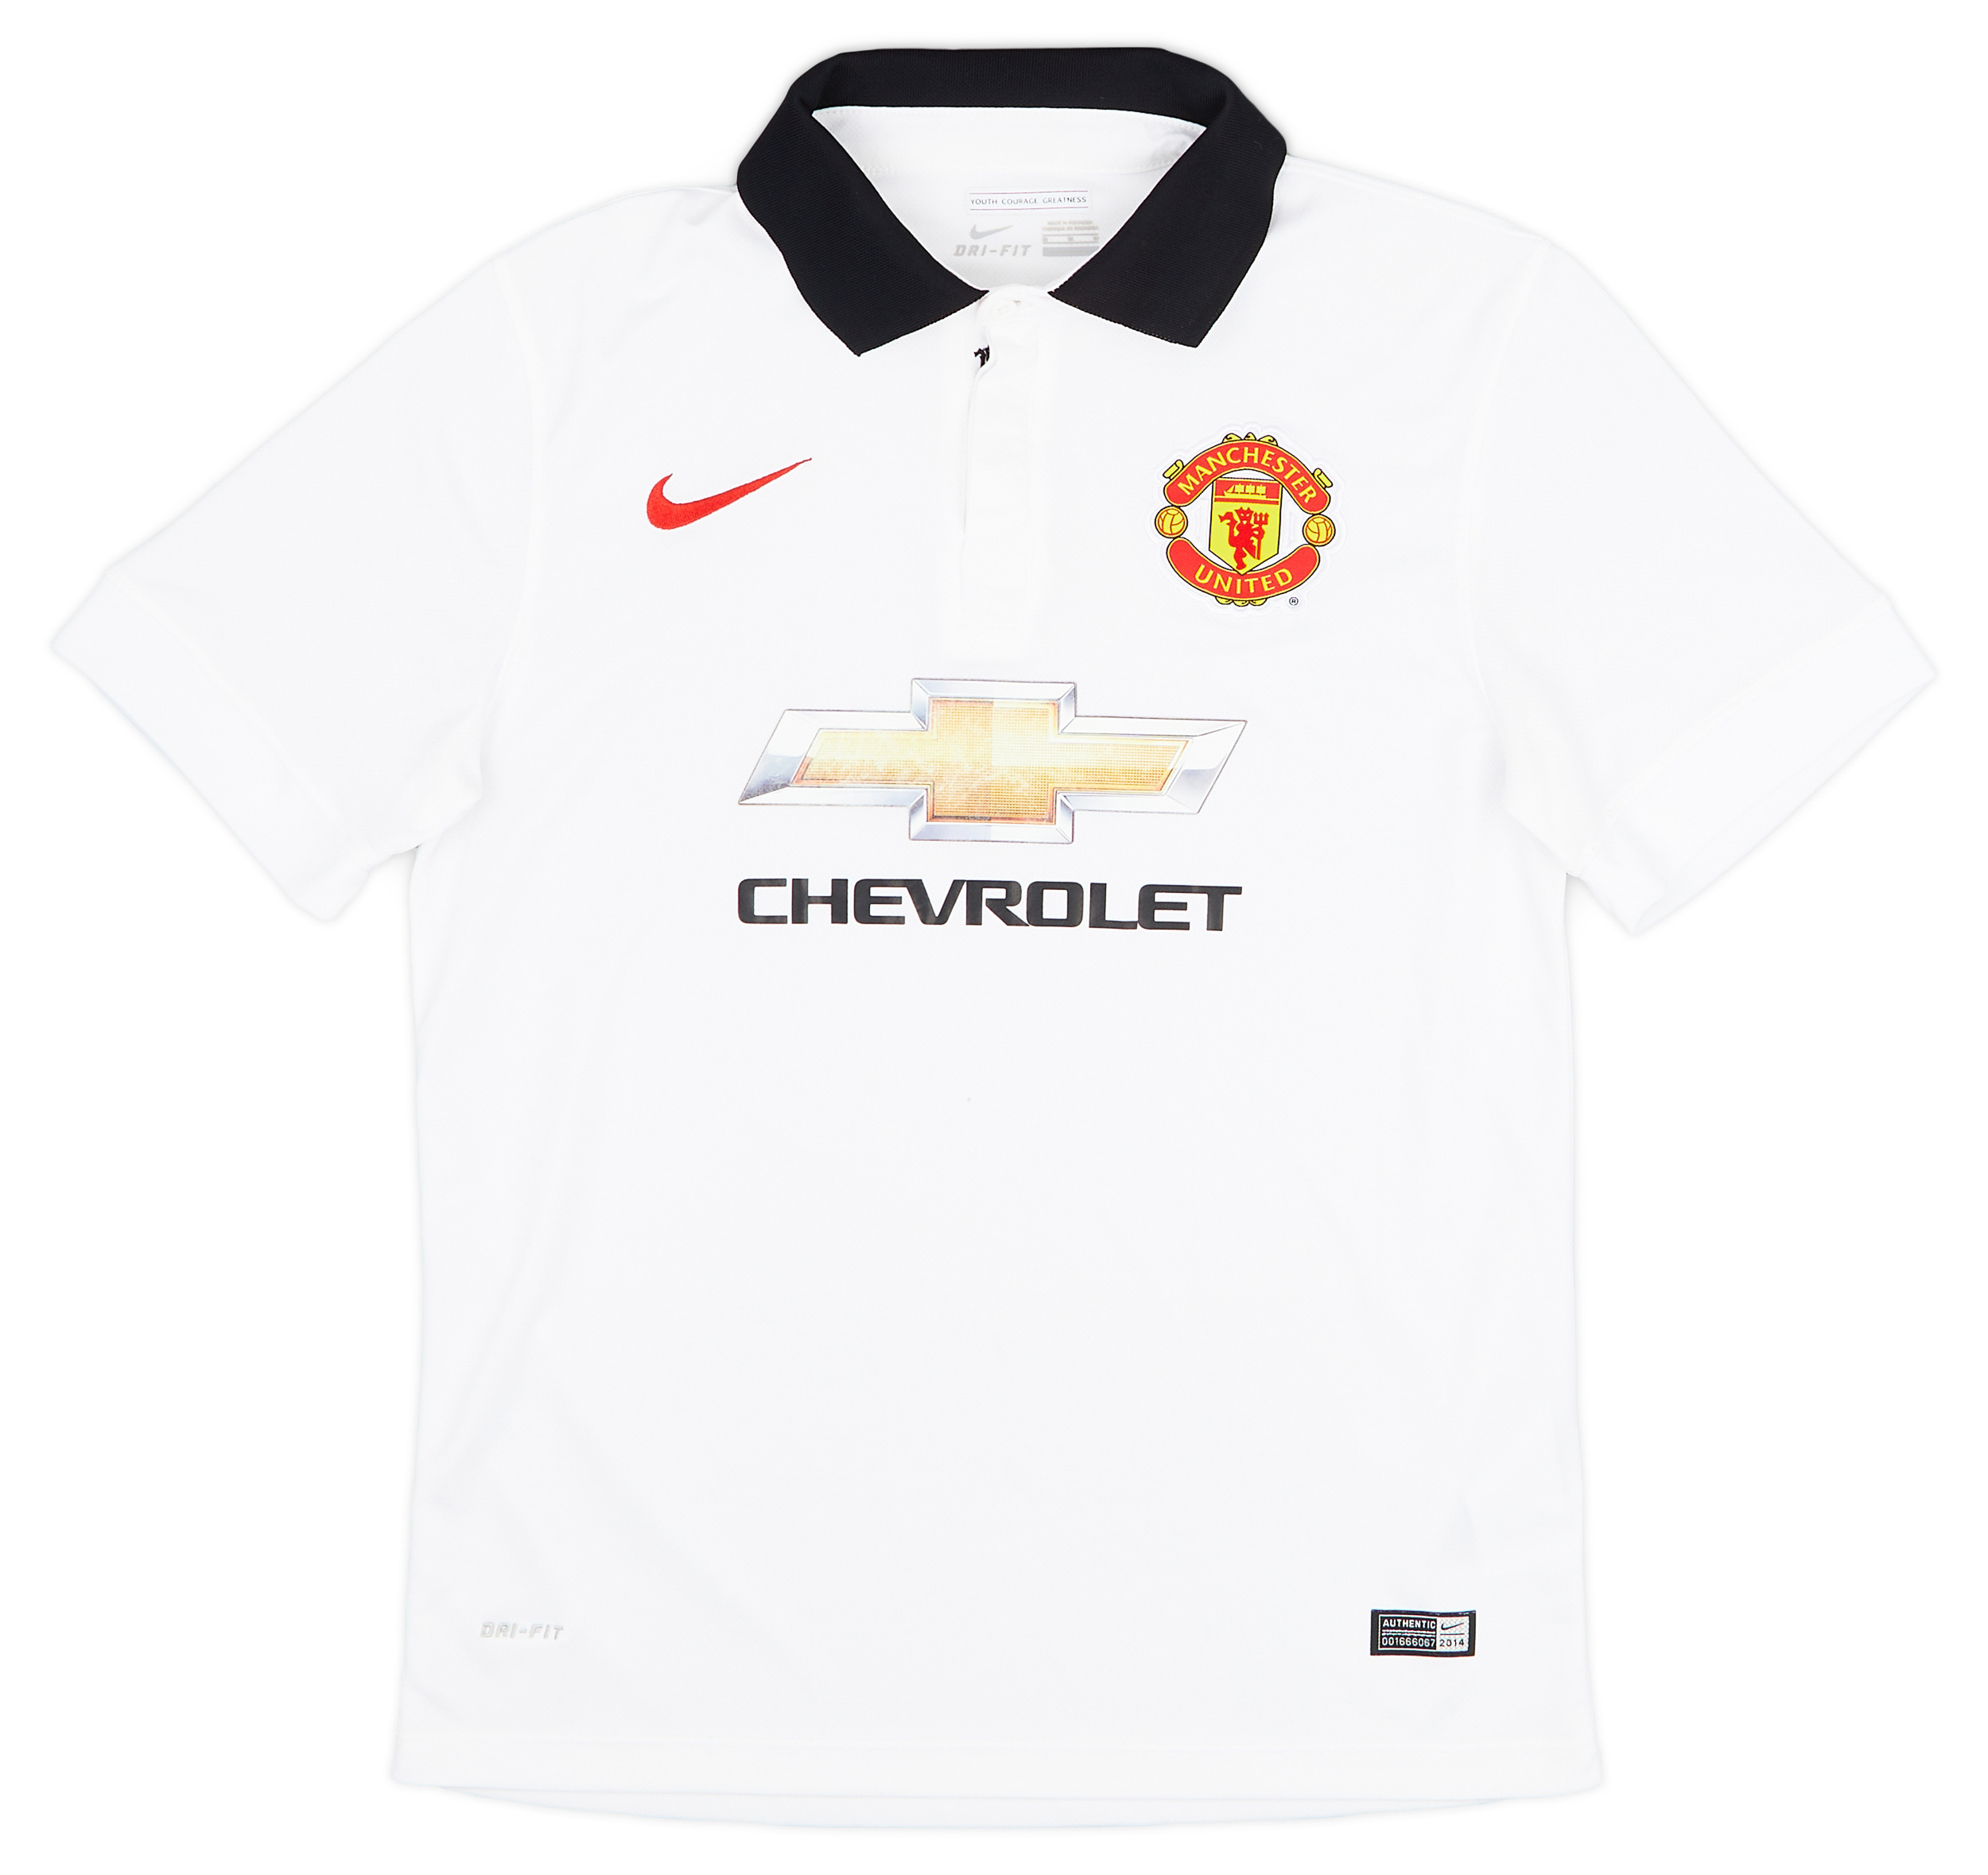 2014-15 Manchester United Away Shirt - 7/10 - ()